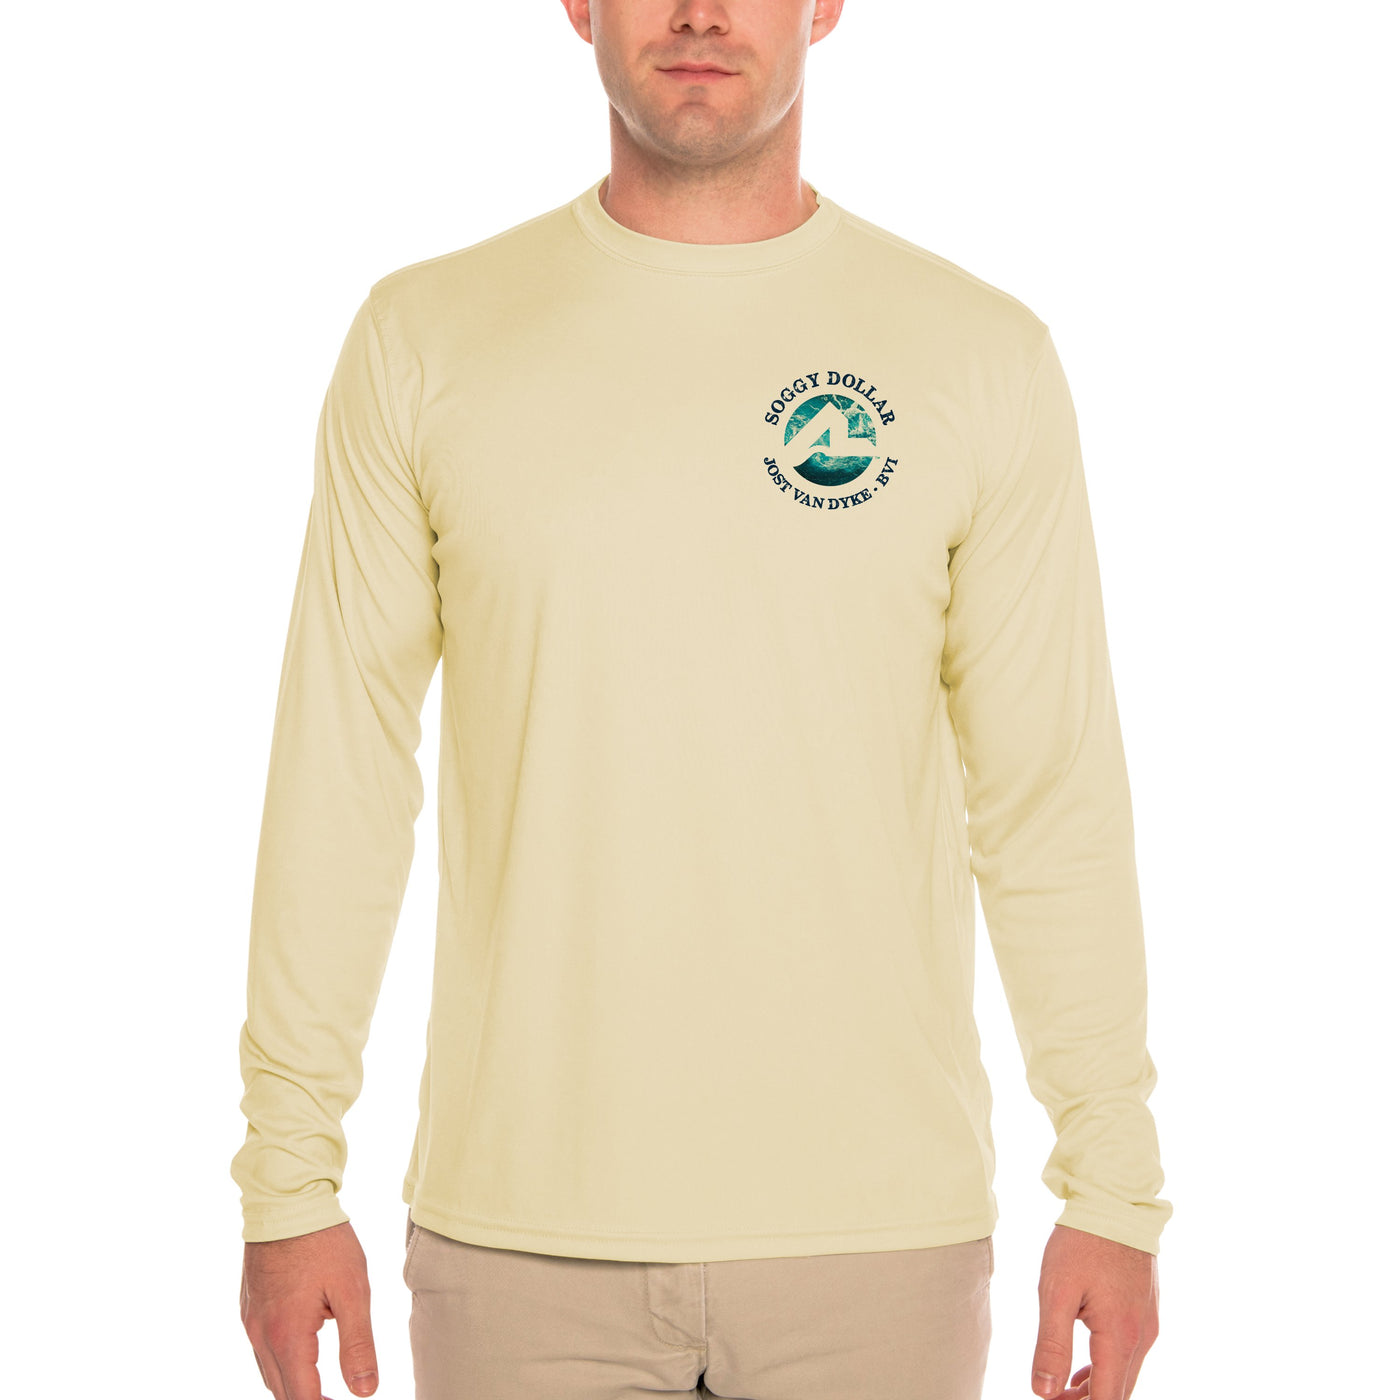 Fish Charts Jost Van Dyke Men's UPF 50+ Long Sleeve T-Shirt